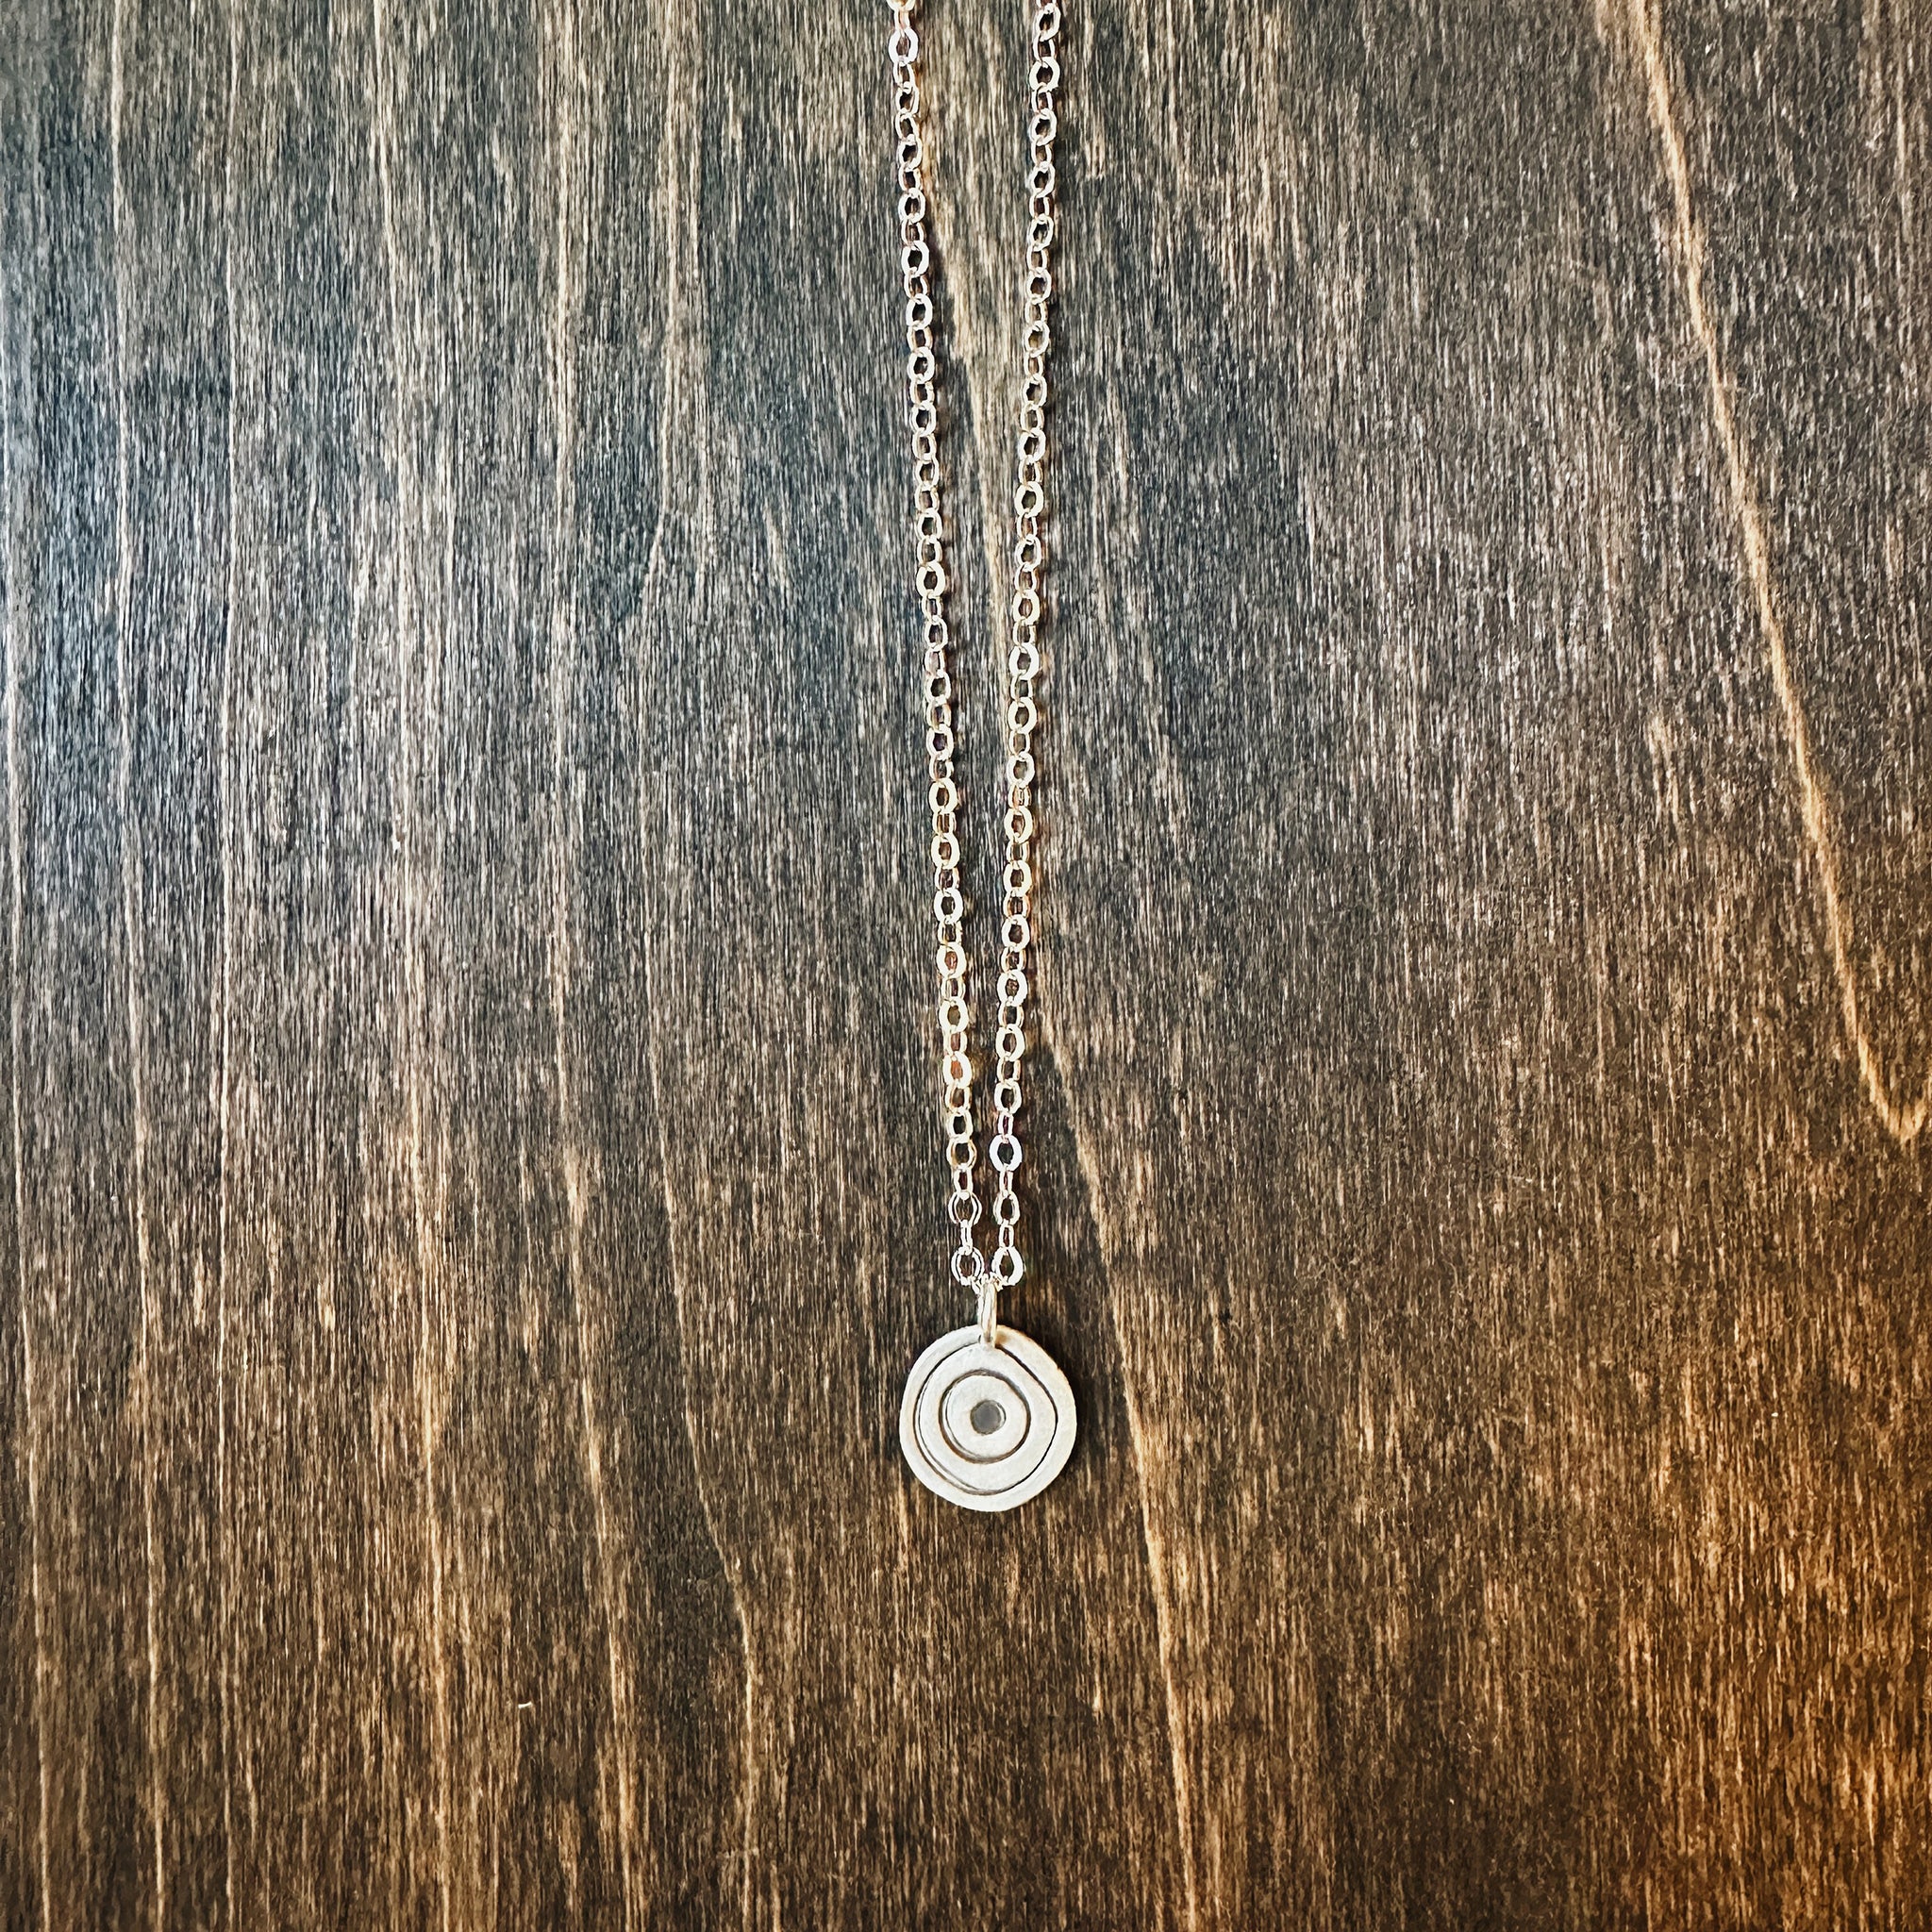 Concentric Elegance Silver Pendant Necklace